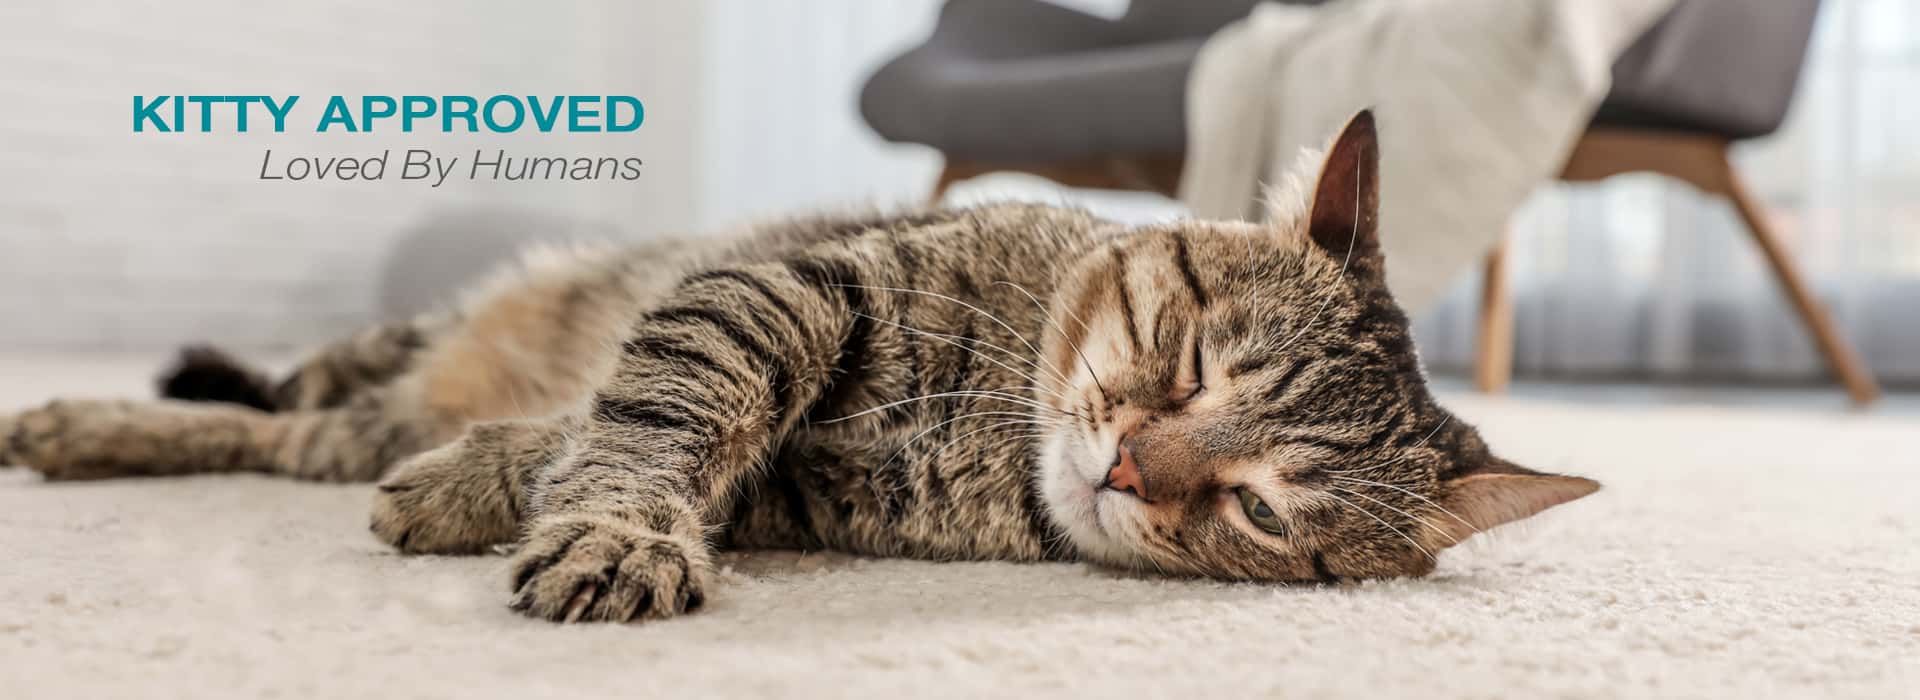 tiger-striped cat lounging on plush pet-friendly beige carpet